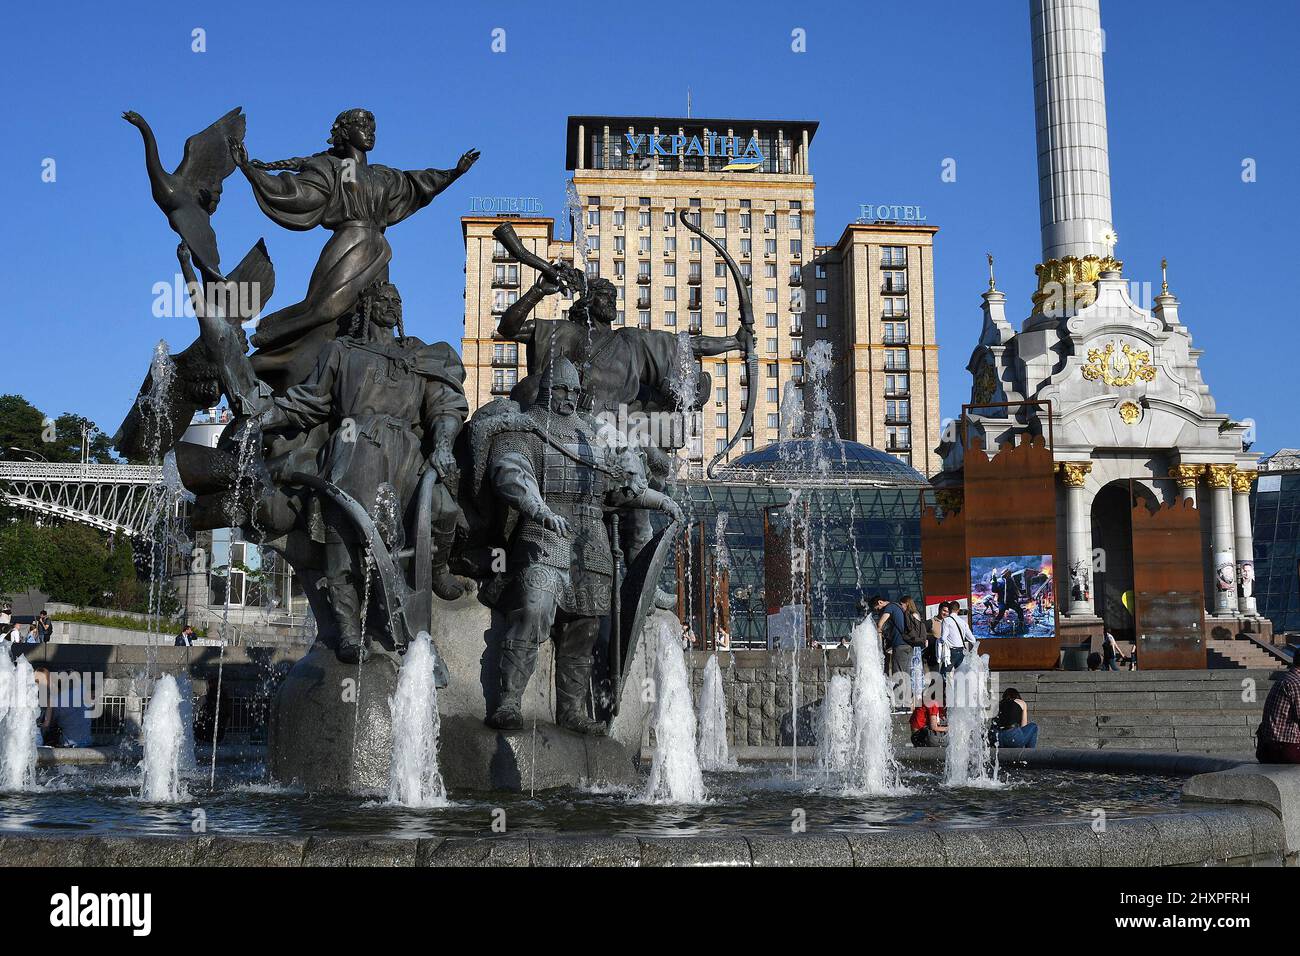 HISTORICAL SCULPTURE / MONUMENT IN MAIDAN NEZALEZHNOSI (INDEPENDENCE SQUARE), KYIV, UKRAINE Stock Photo